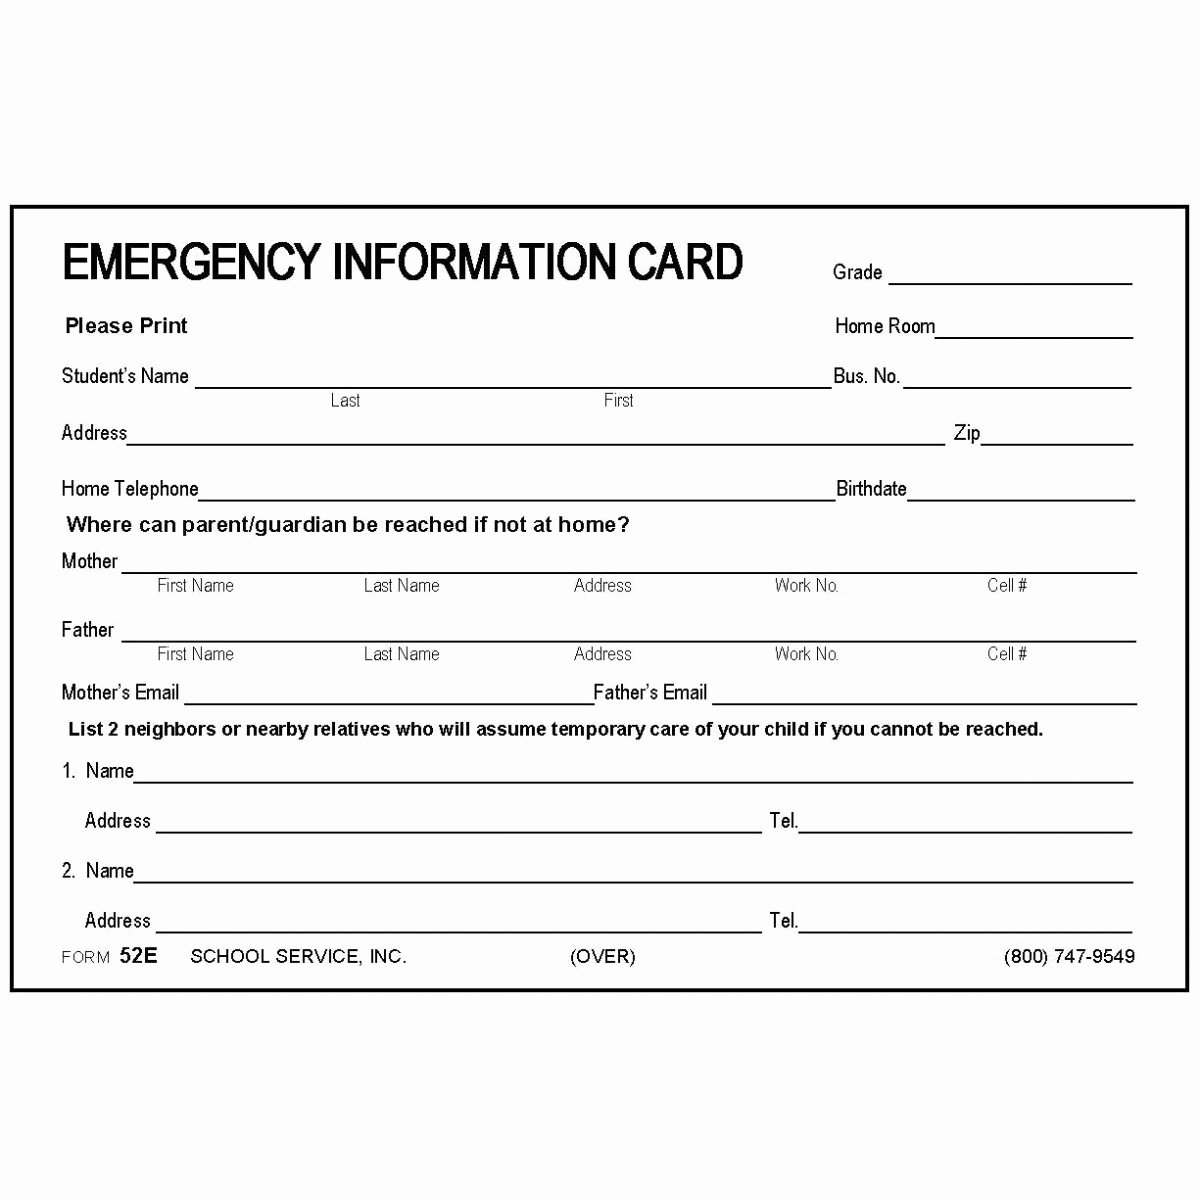 Info Card Template Inspirational 52e Emergency Information Card 4 X 6 Size